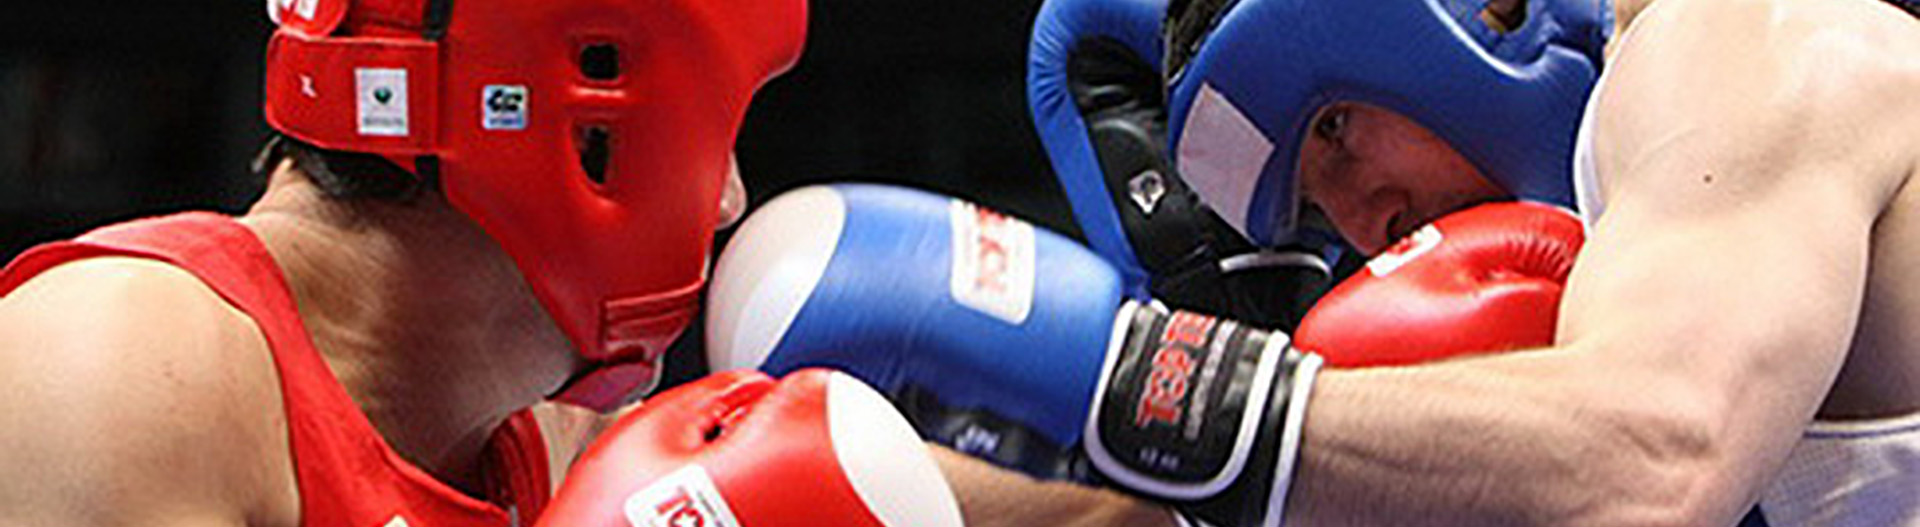 Бокс СВАО - картинка boksverh.jpg